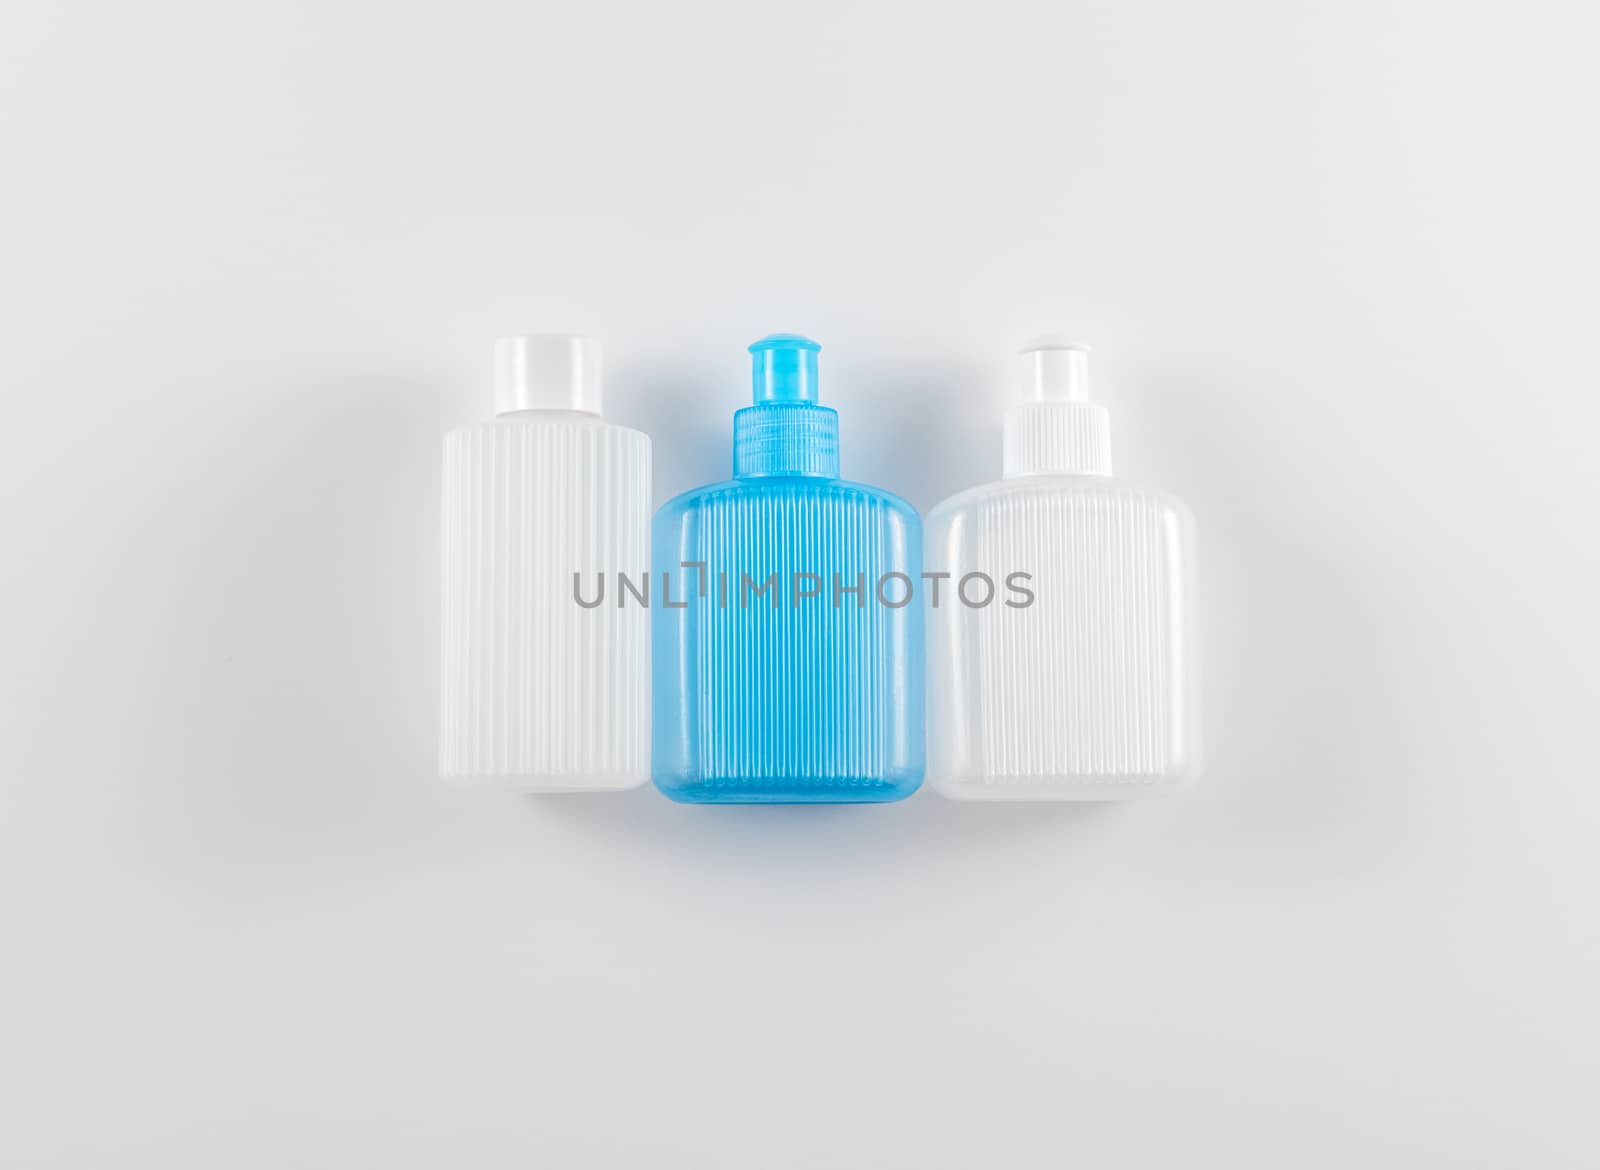 Plastic Bottles for Travel by krisblackphotography